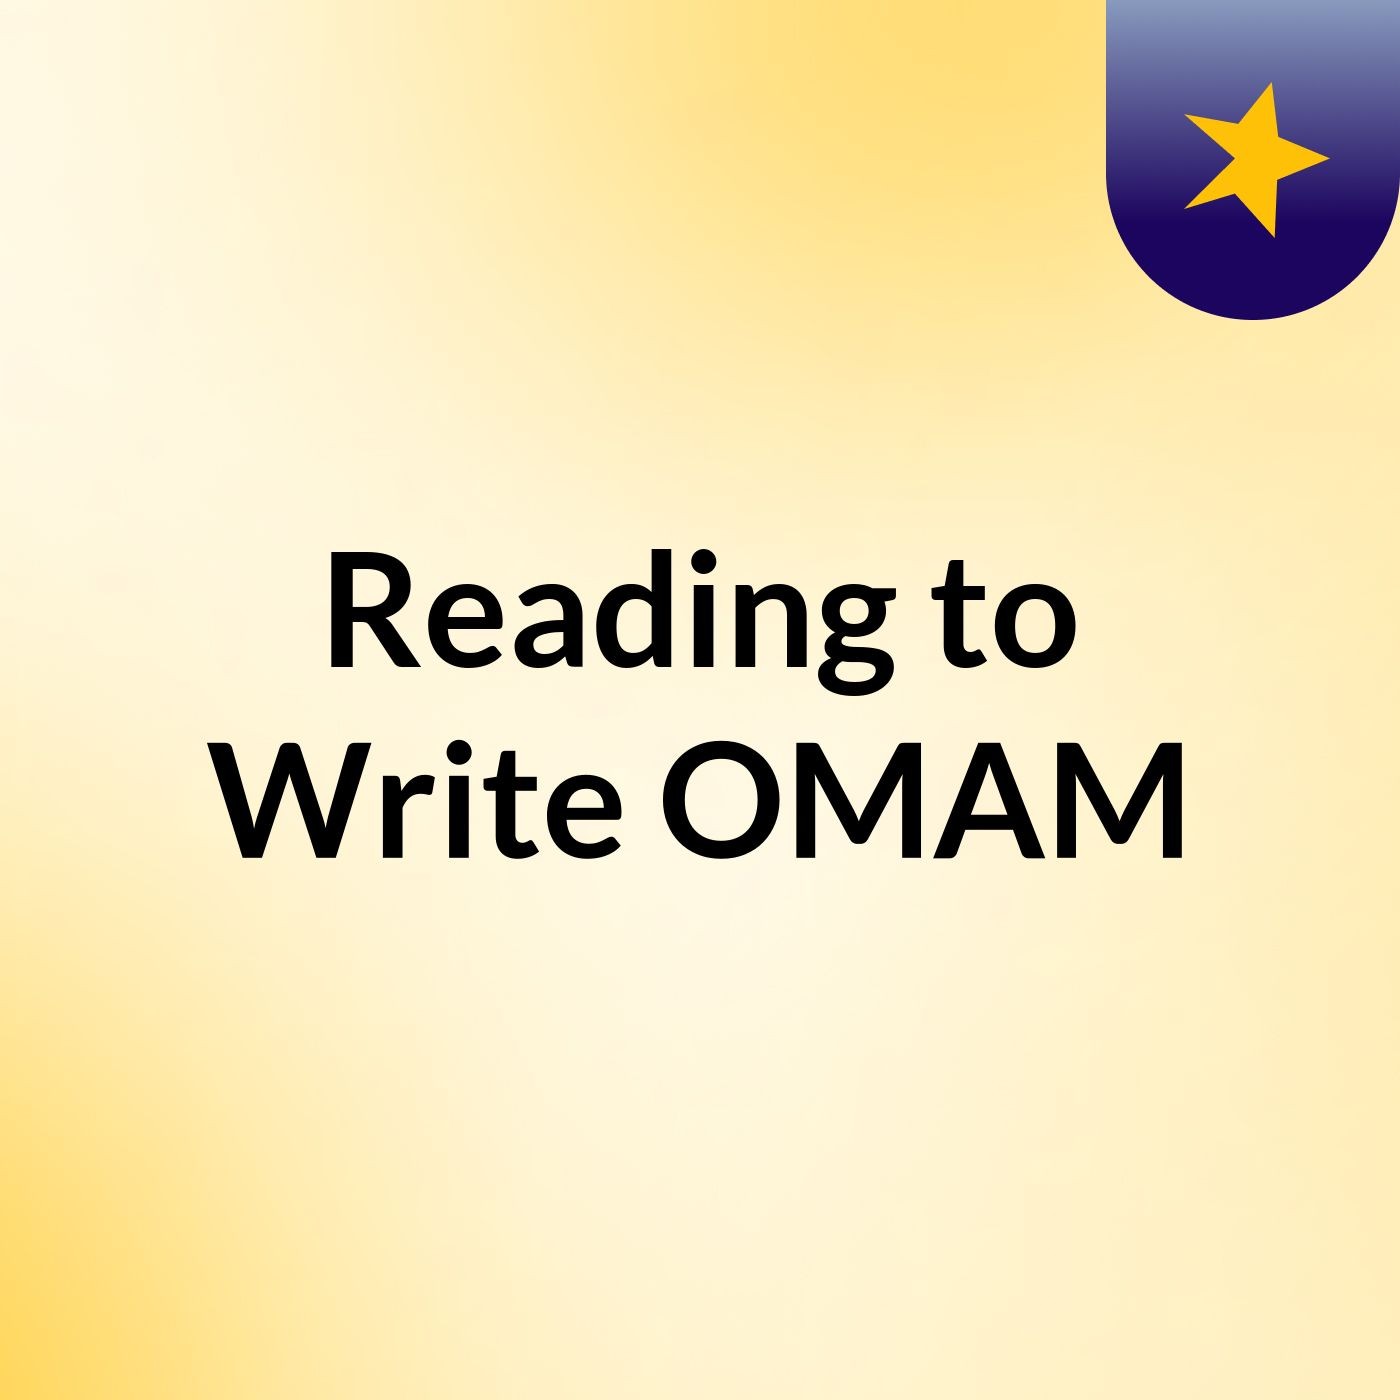 Reading to Write OMAM